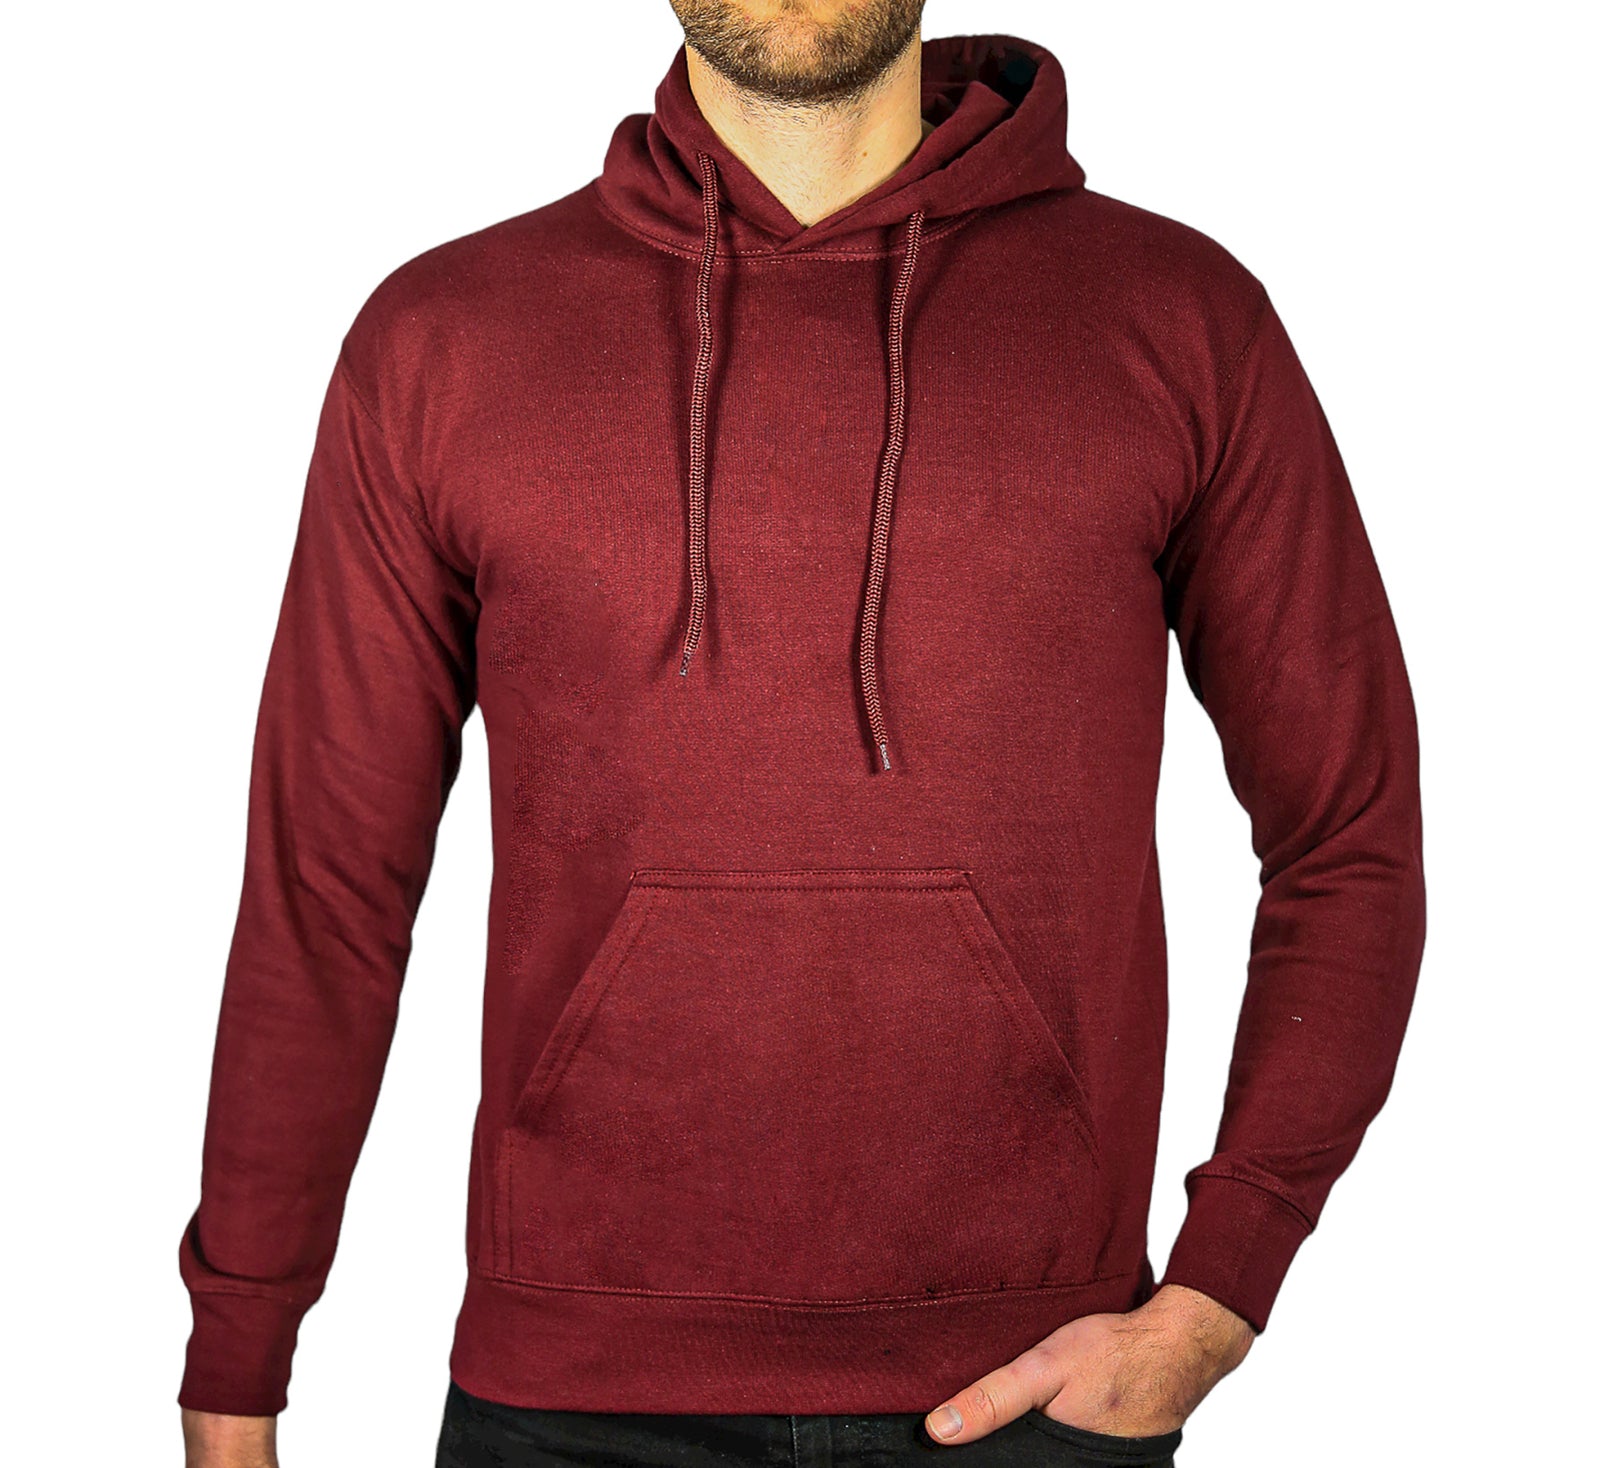 Adult Mens 100% Cotton Fleece Hoodie Jumper Pullover Sweater Warm Sweatshirt - Maroon/Burgundy - XL